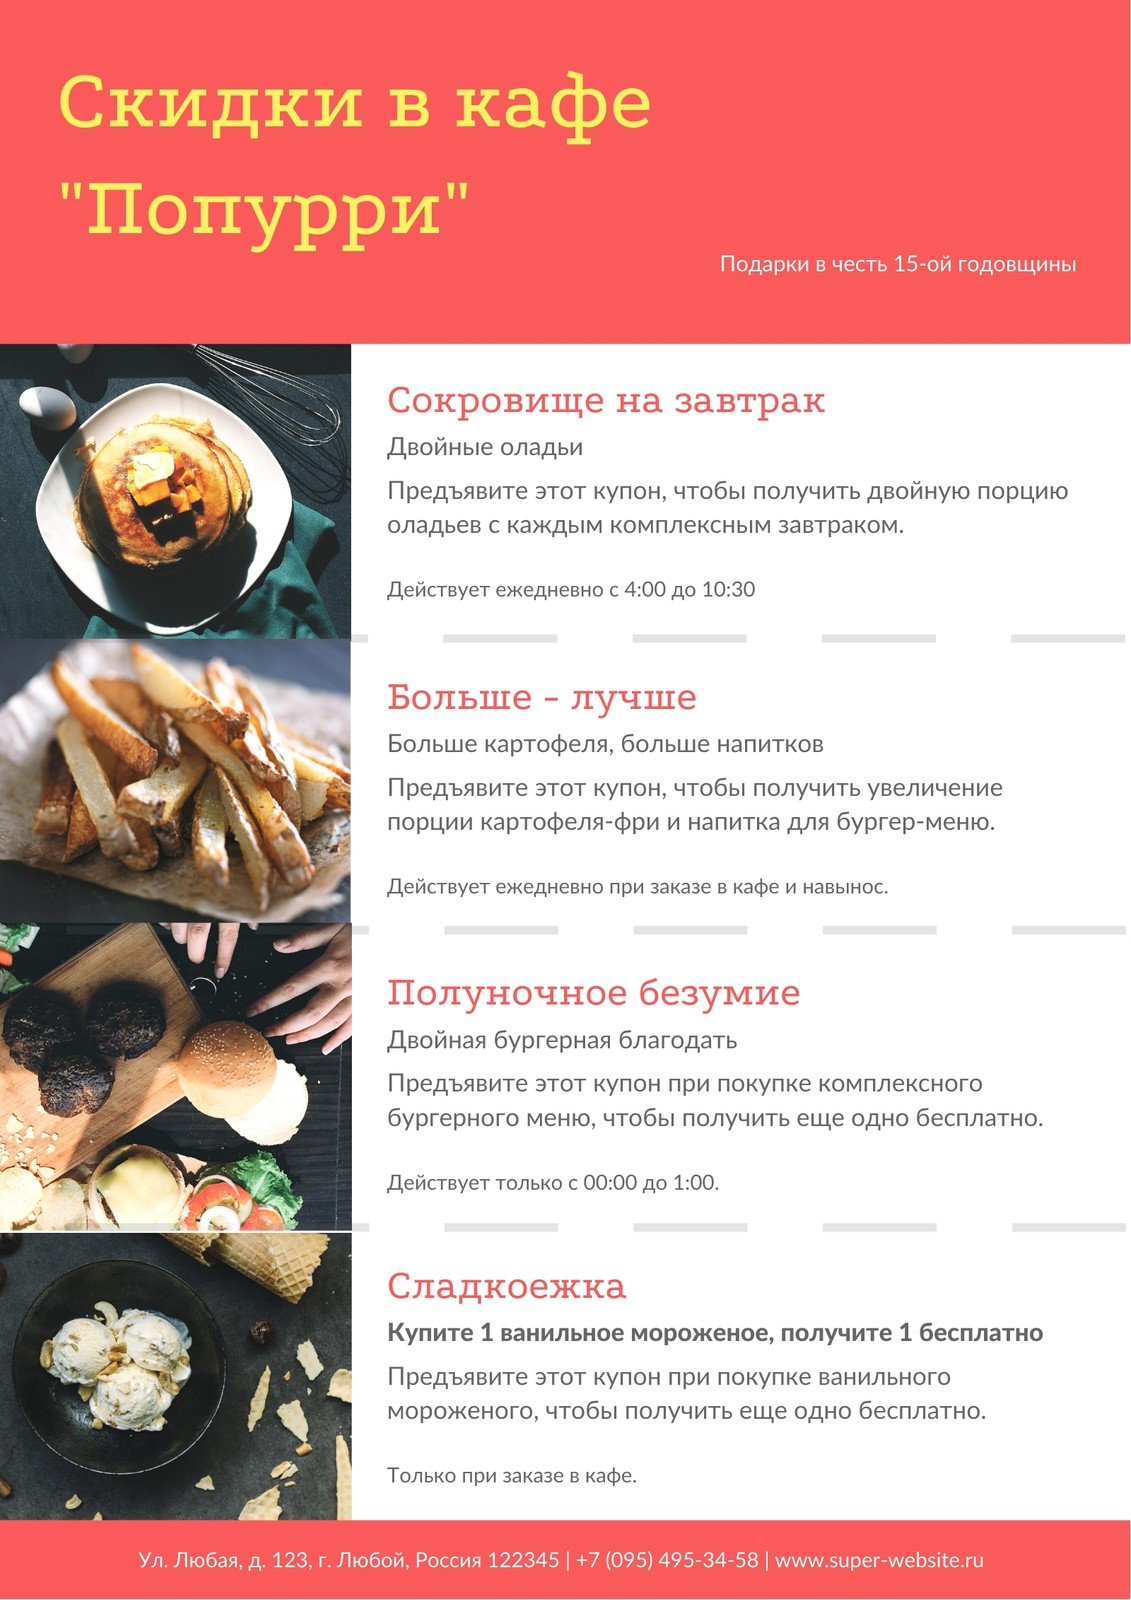 internat-mednogorsk.ru | Акции, скидки и промокоды | VK